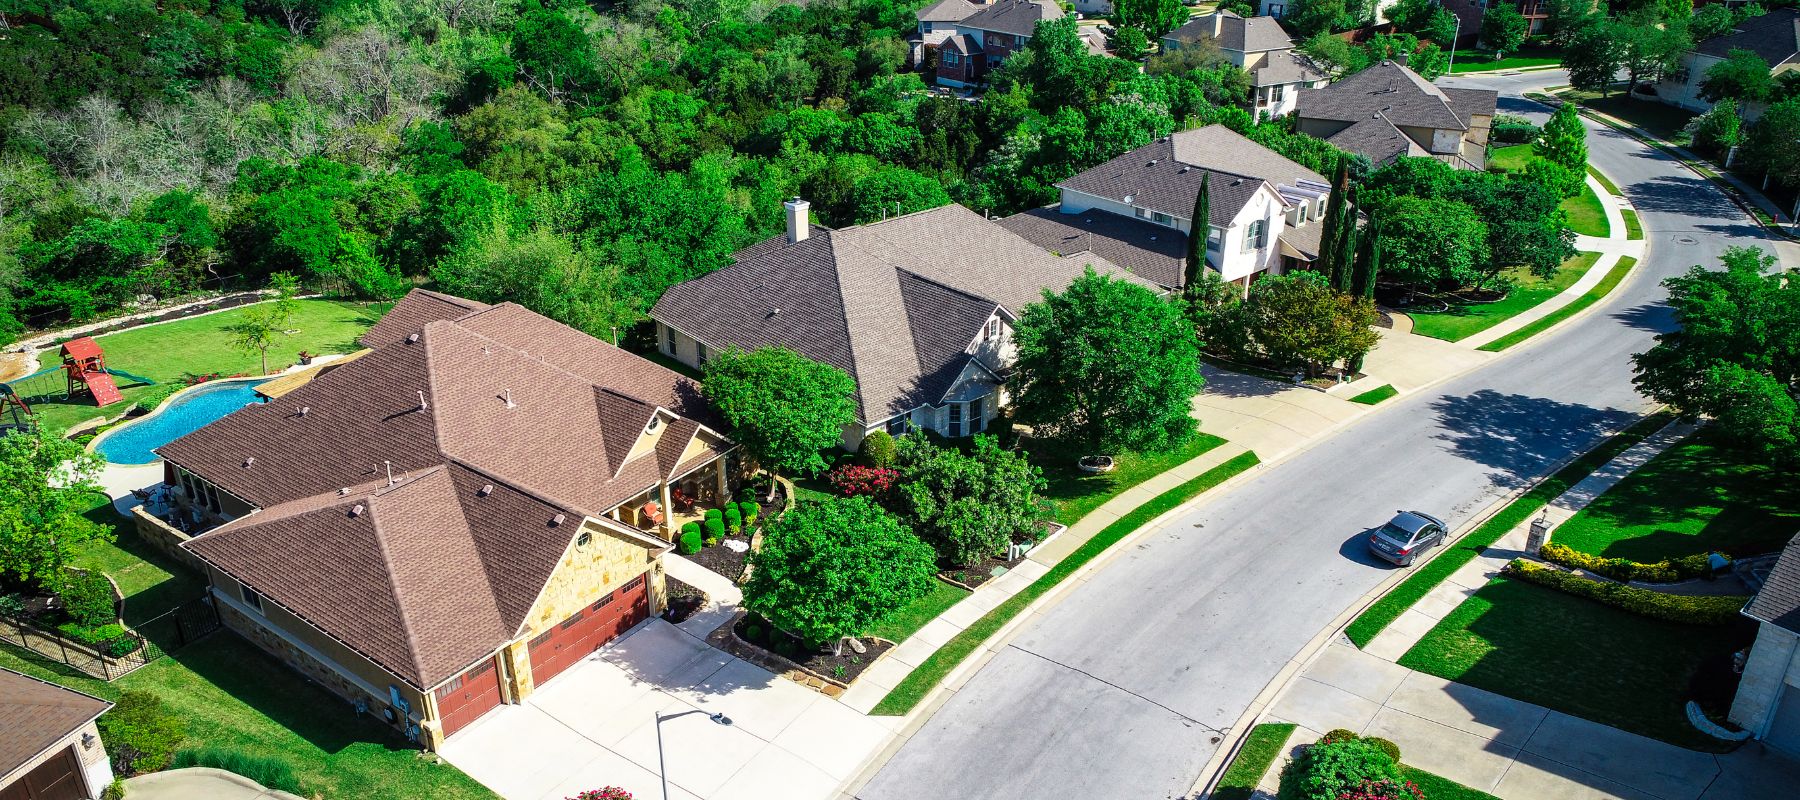 converse texas neighborhood aerial shot